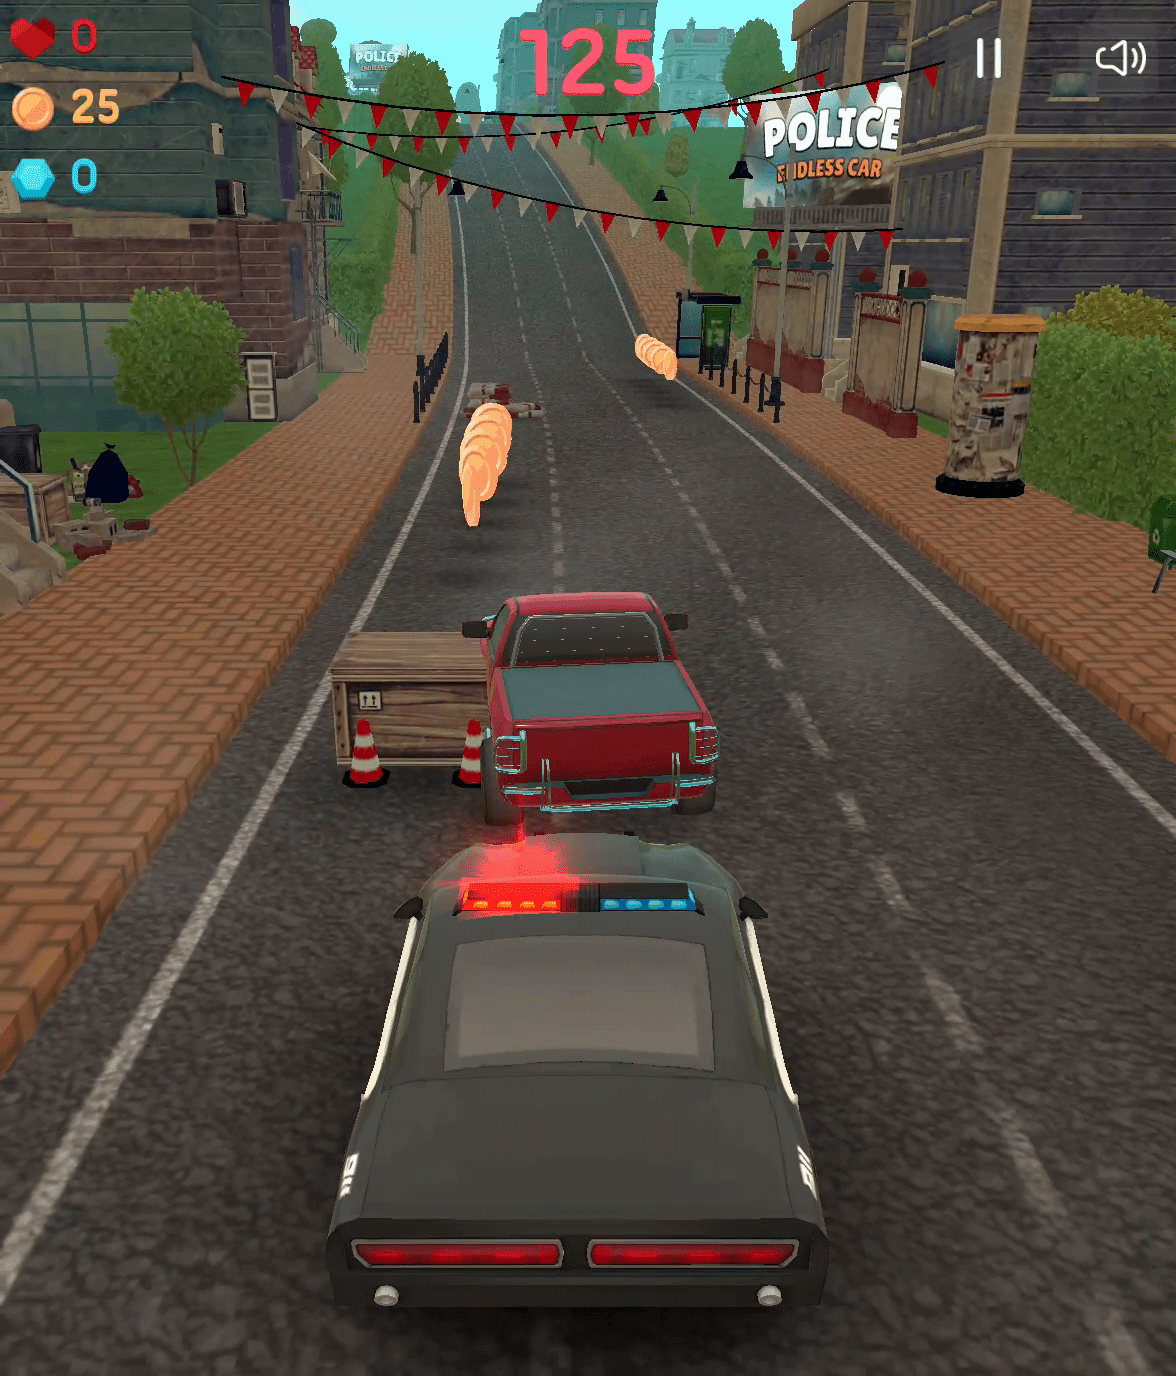 Police Endless Car Screenshot 8